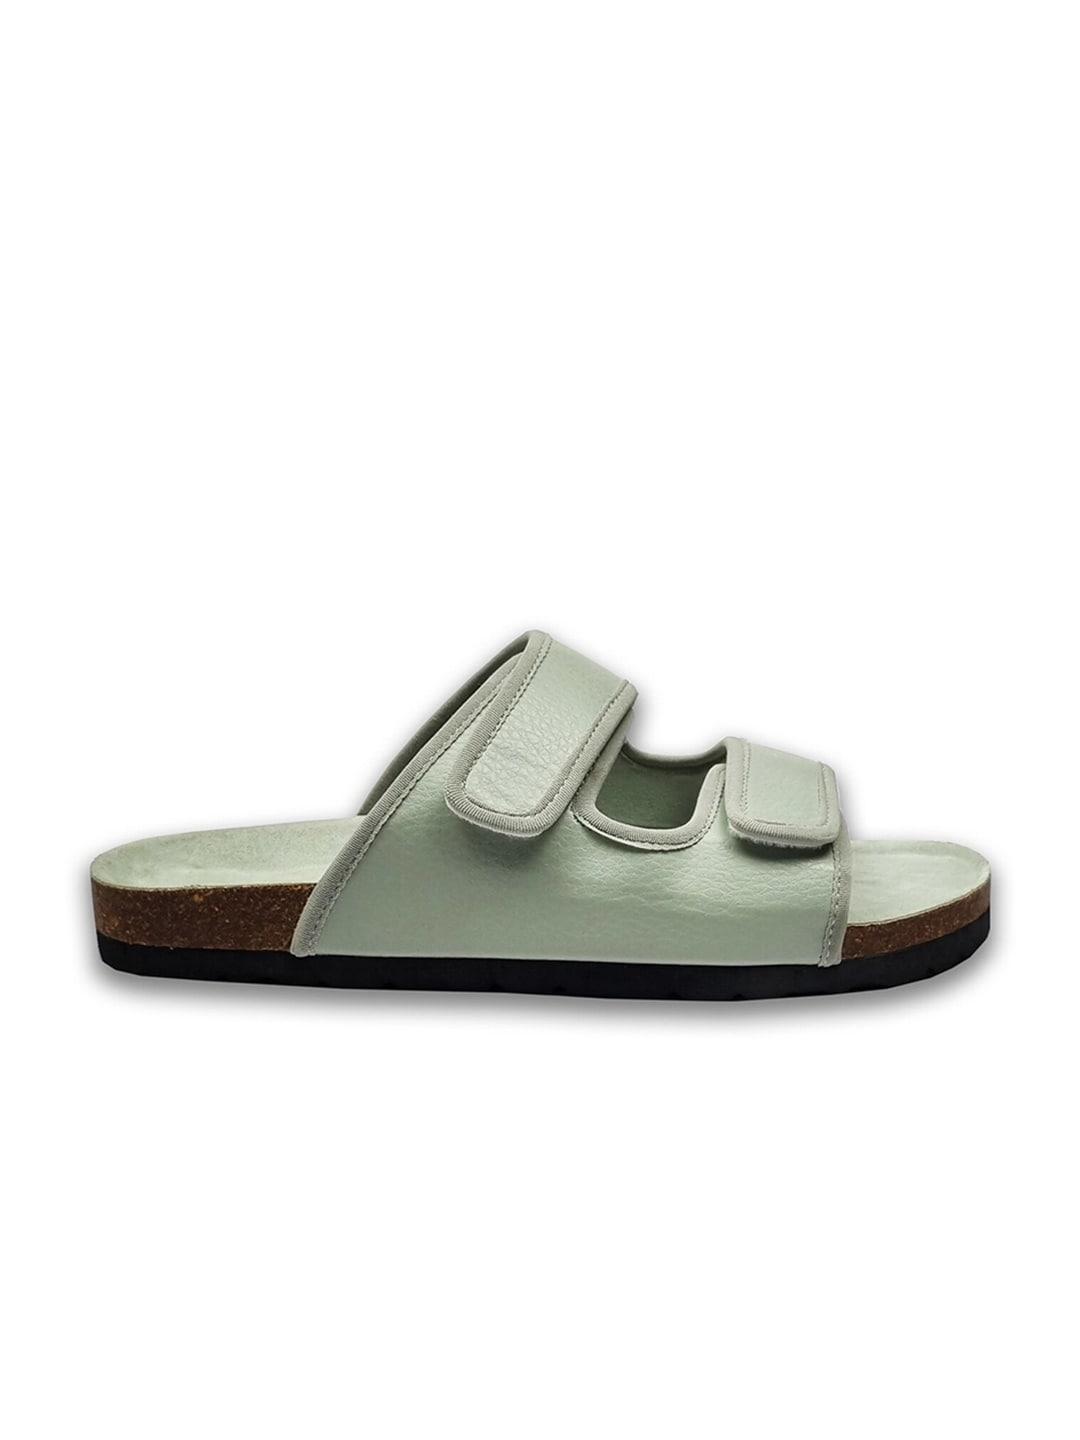 nostrain-textured-double-strap-open-toe-flats